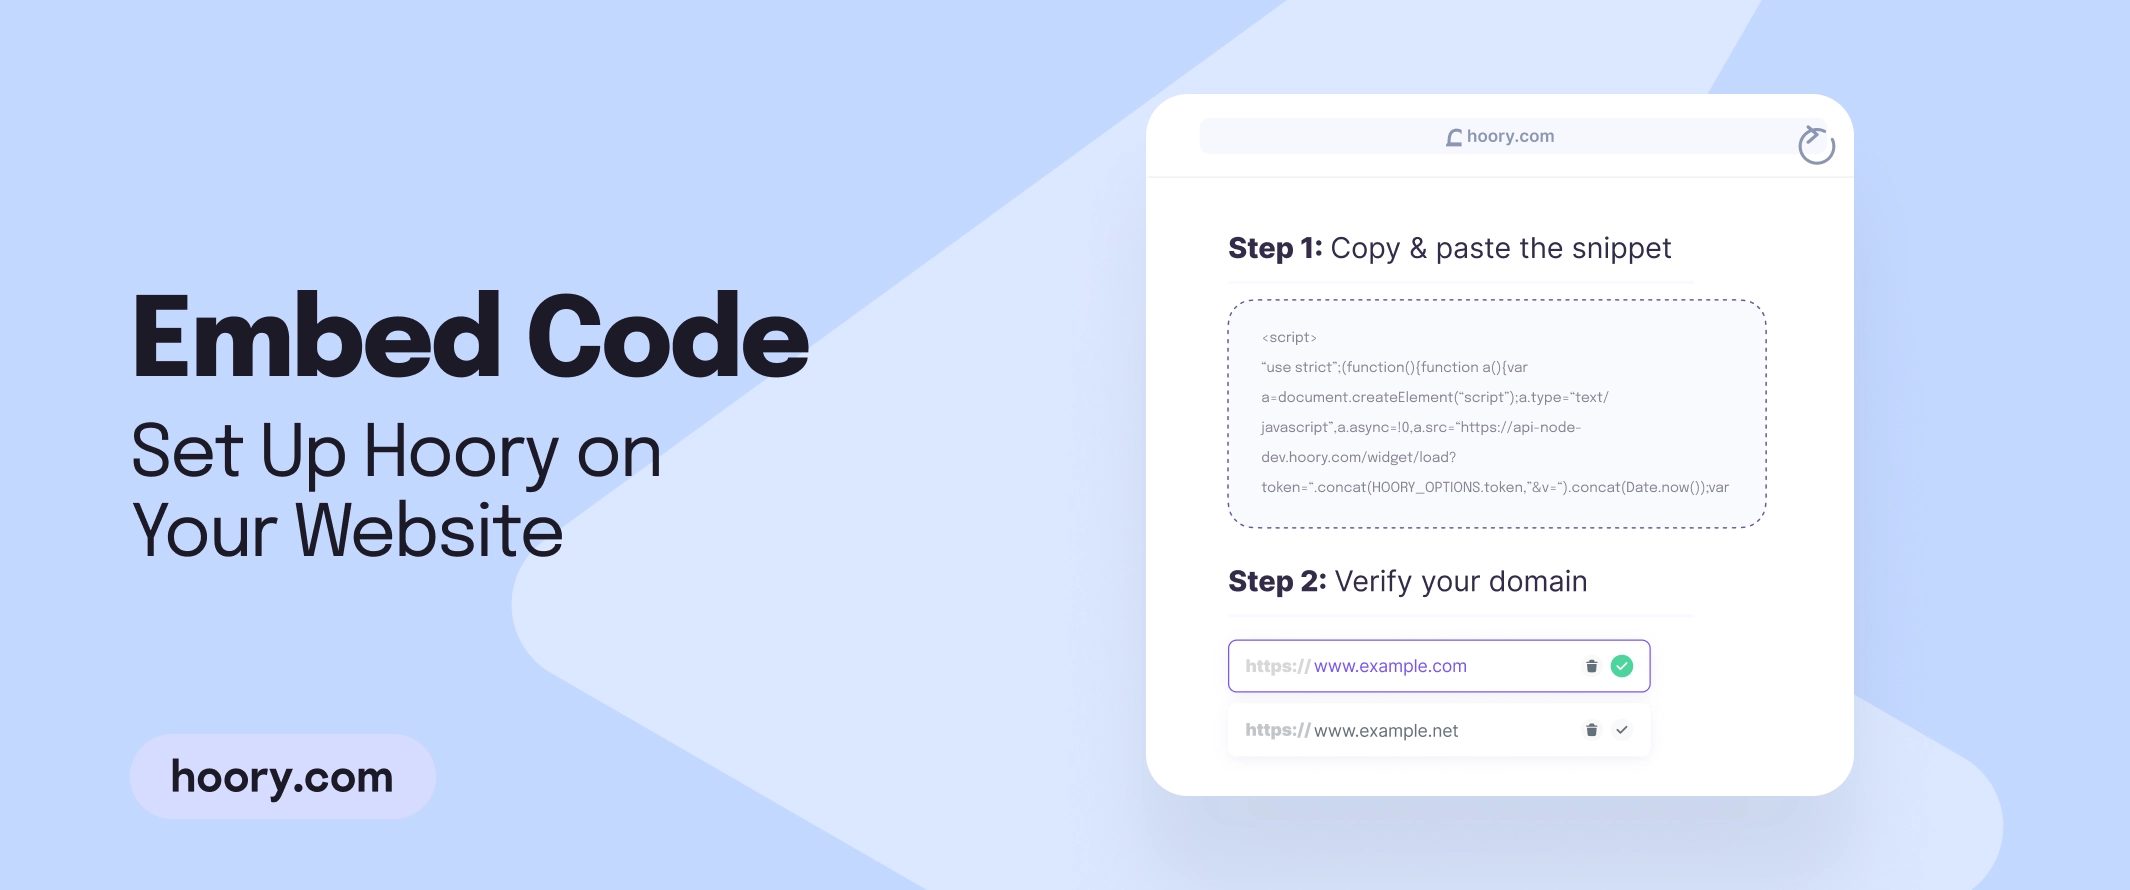 Embed Code: Set Up Hoory on Your Website